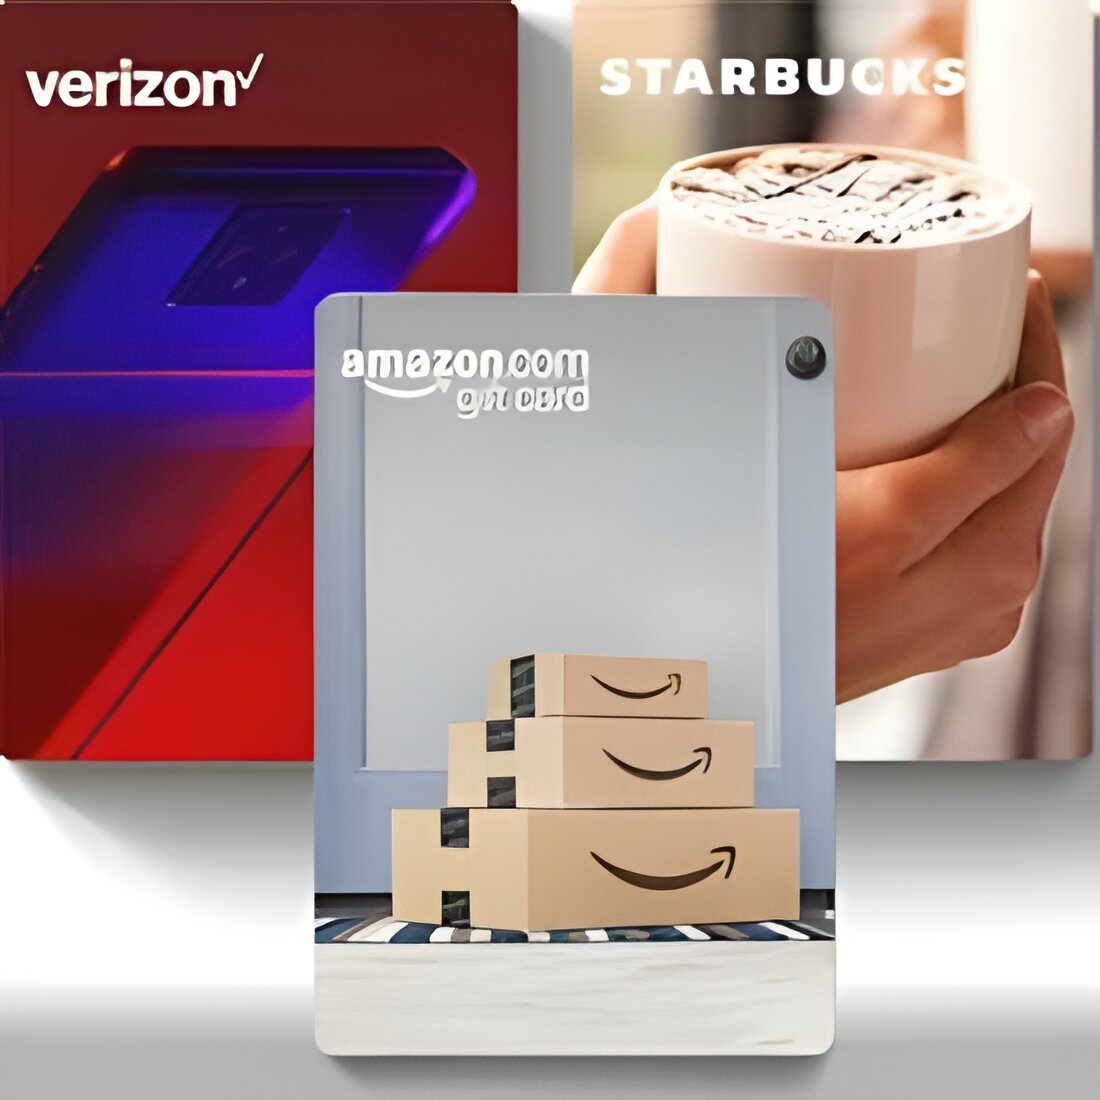 Free $3-$5 Gift Card for Verizon UP Rewards Members